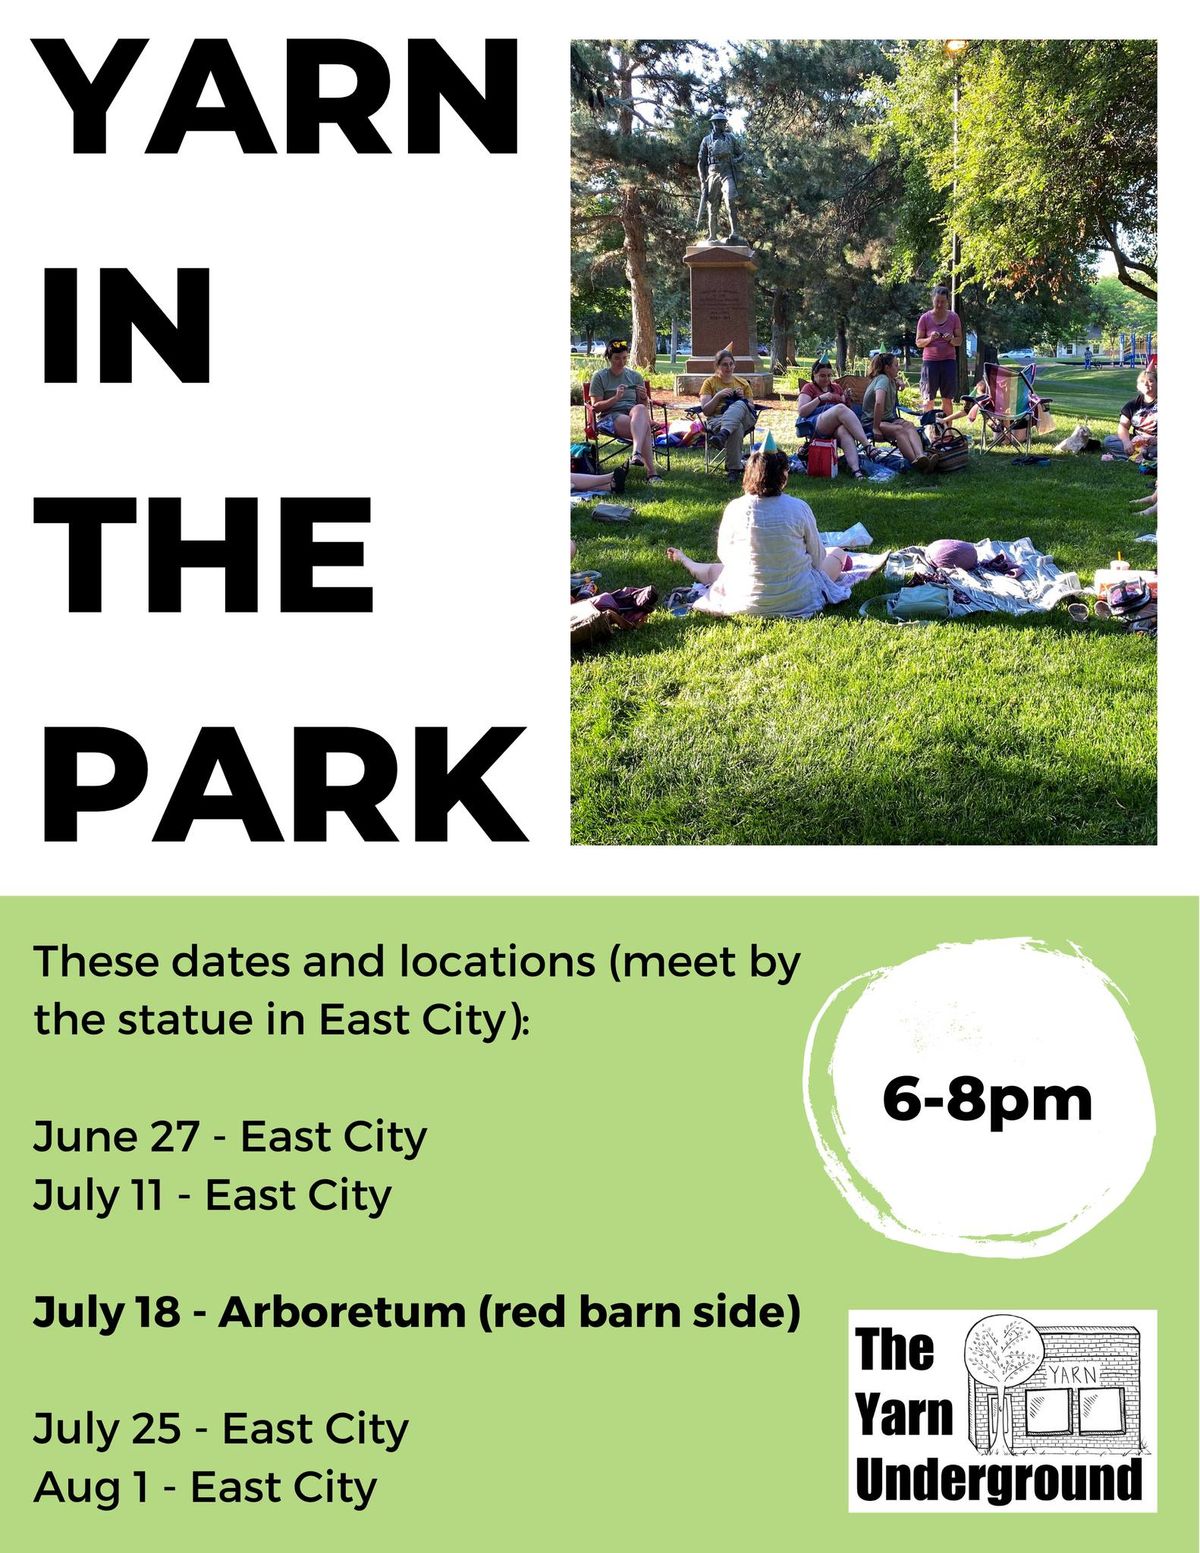 Yarn in the Park - July 11